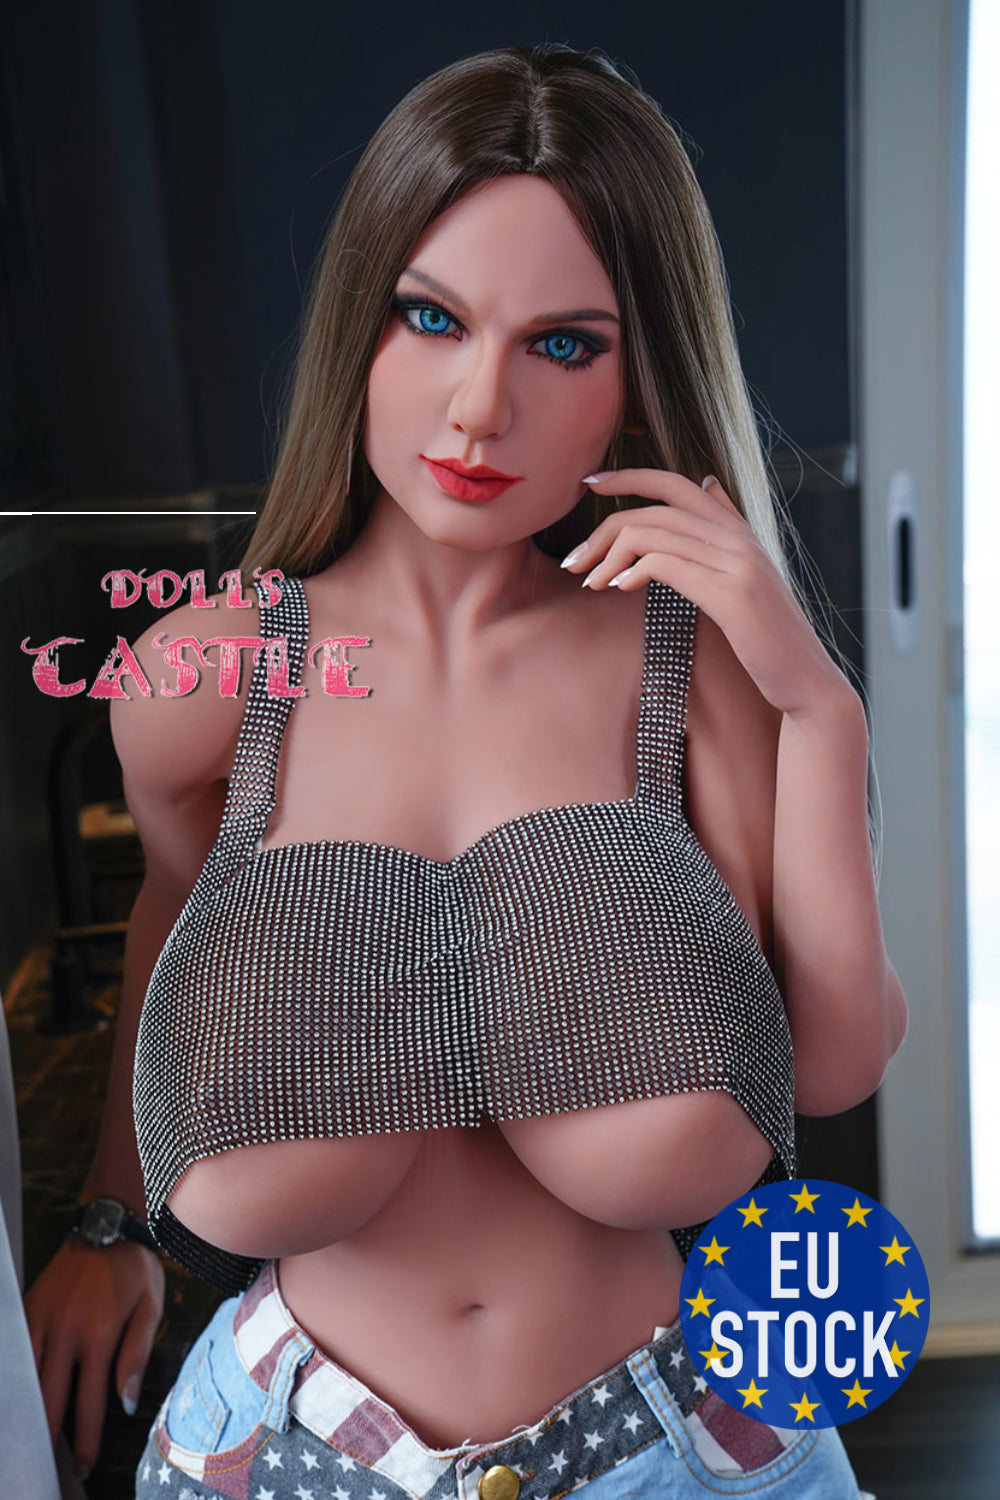 Doll's Castle 153 cm I TPE - #258 (EU) | Buy Sex Dolls at DOLLS ACTUALLY